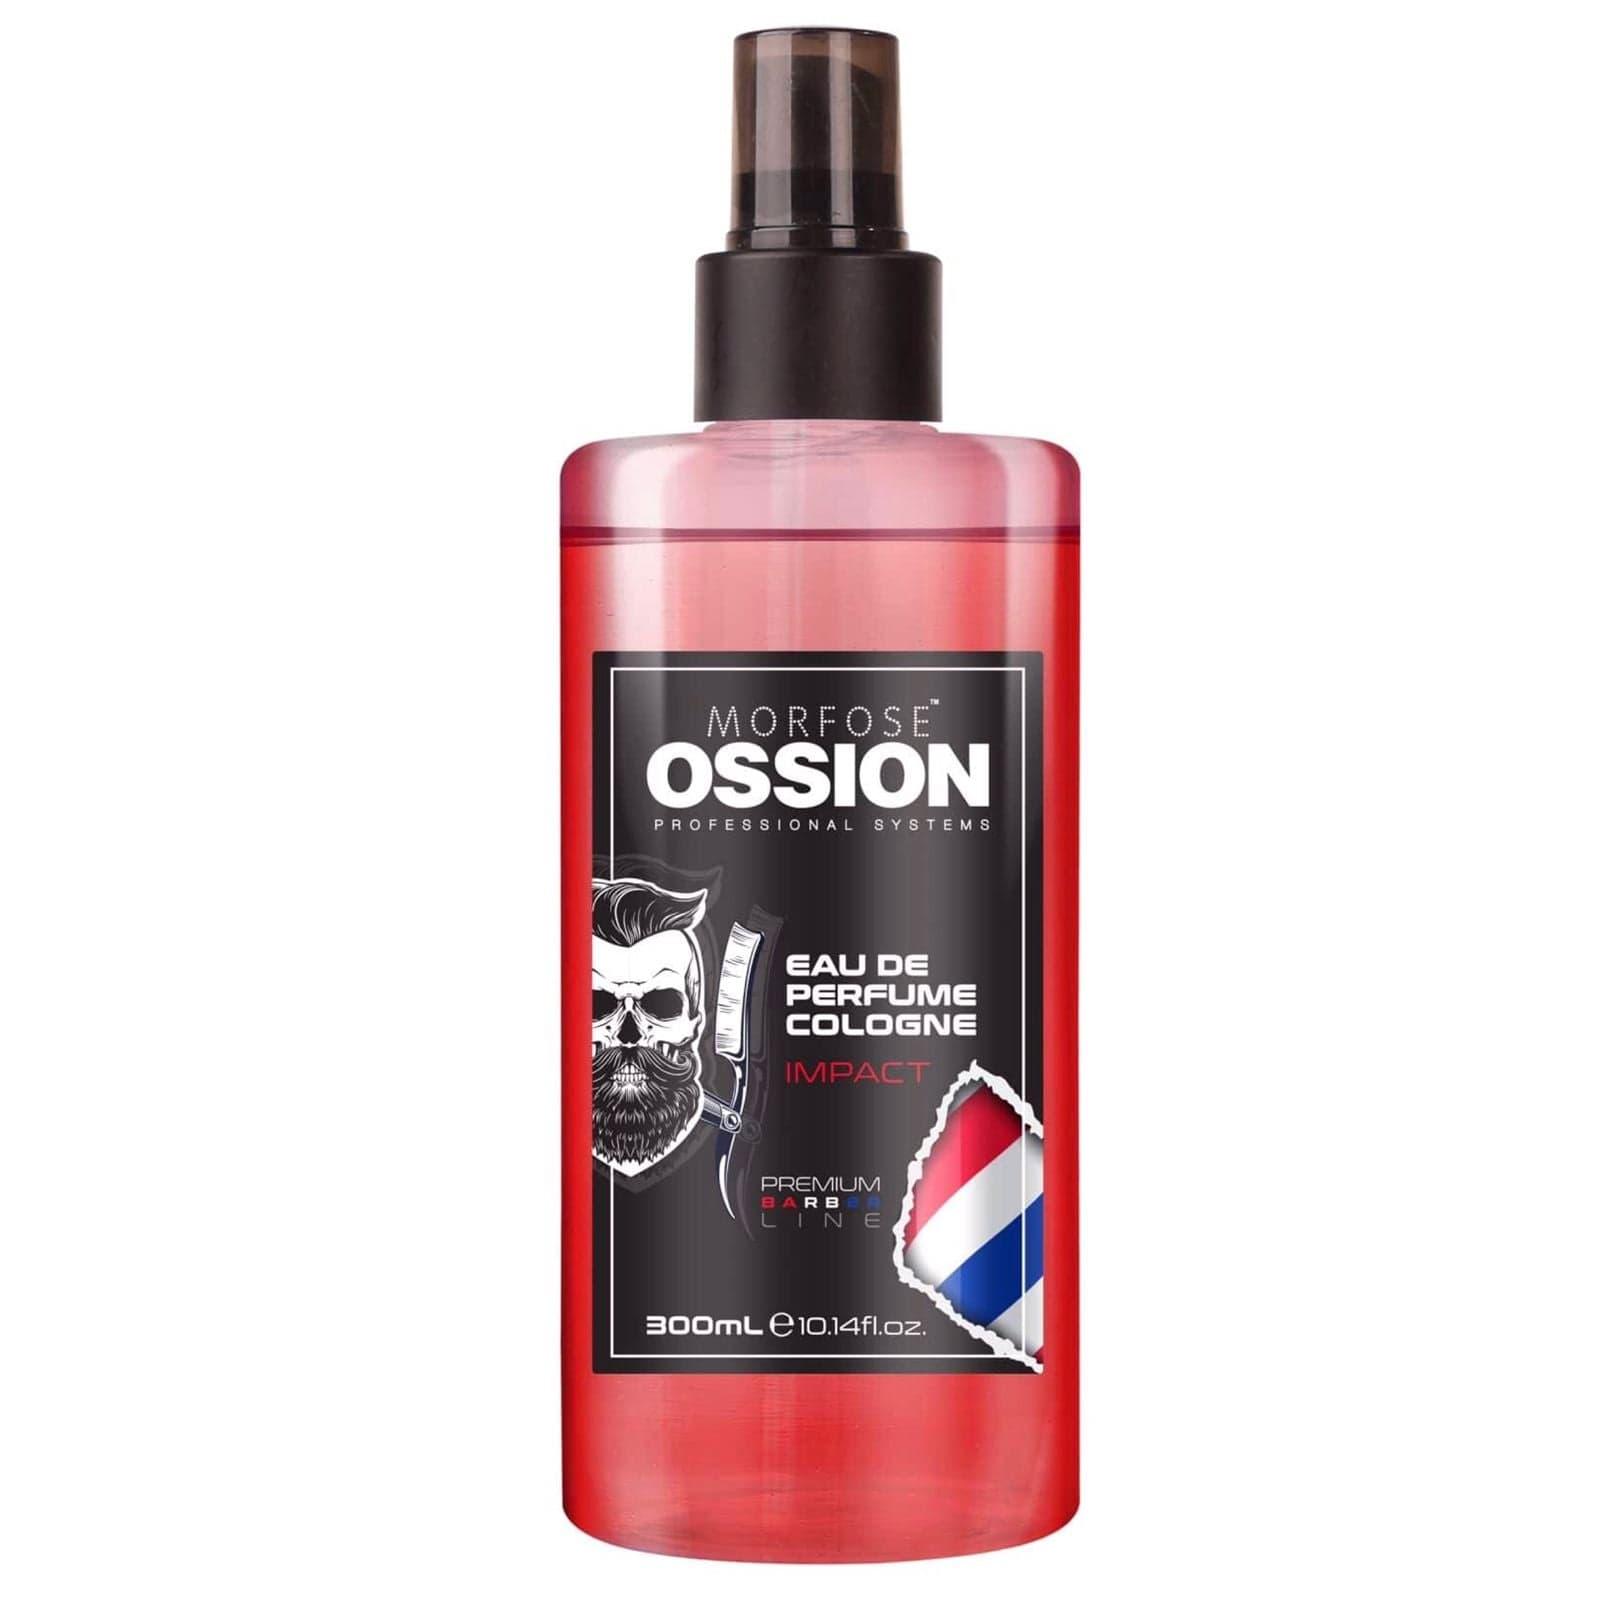 Morfose Ossion EAU De Perfume Cologne Impact 300ml